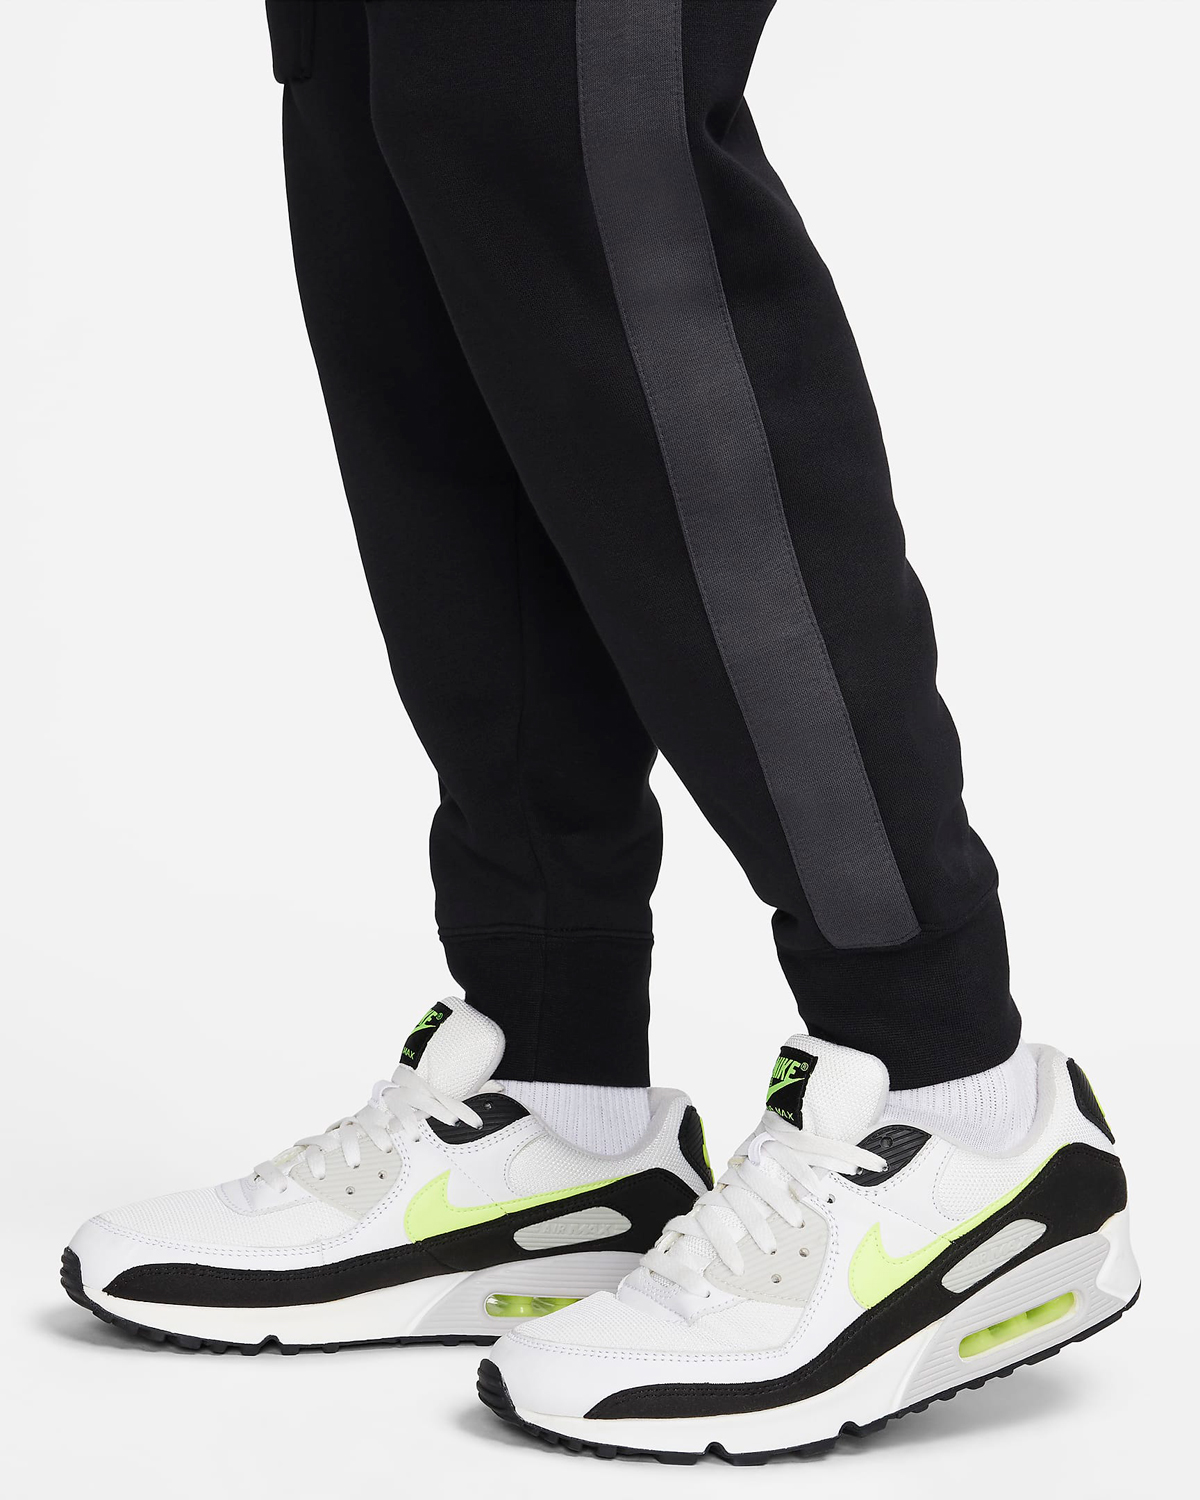 Nike-Air-Fleece-Cargo-Pants-Black-Anthracite-Volt-3